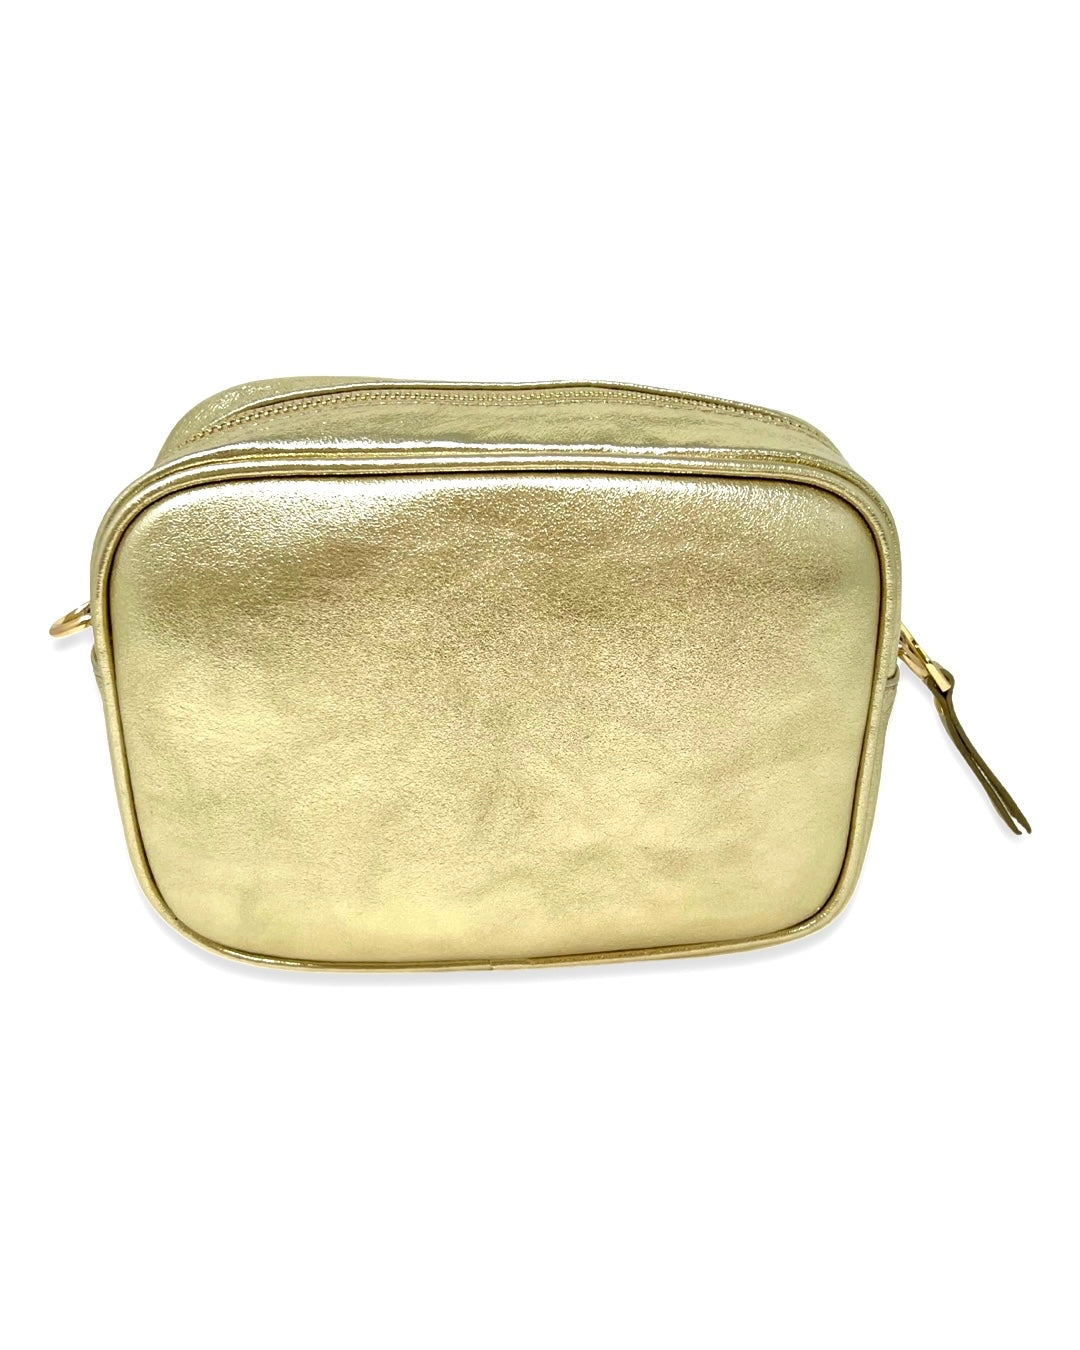 Firenze Bag in Metallic Gold